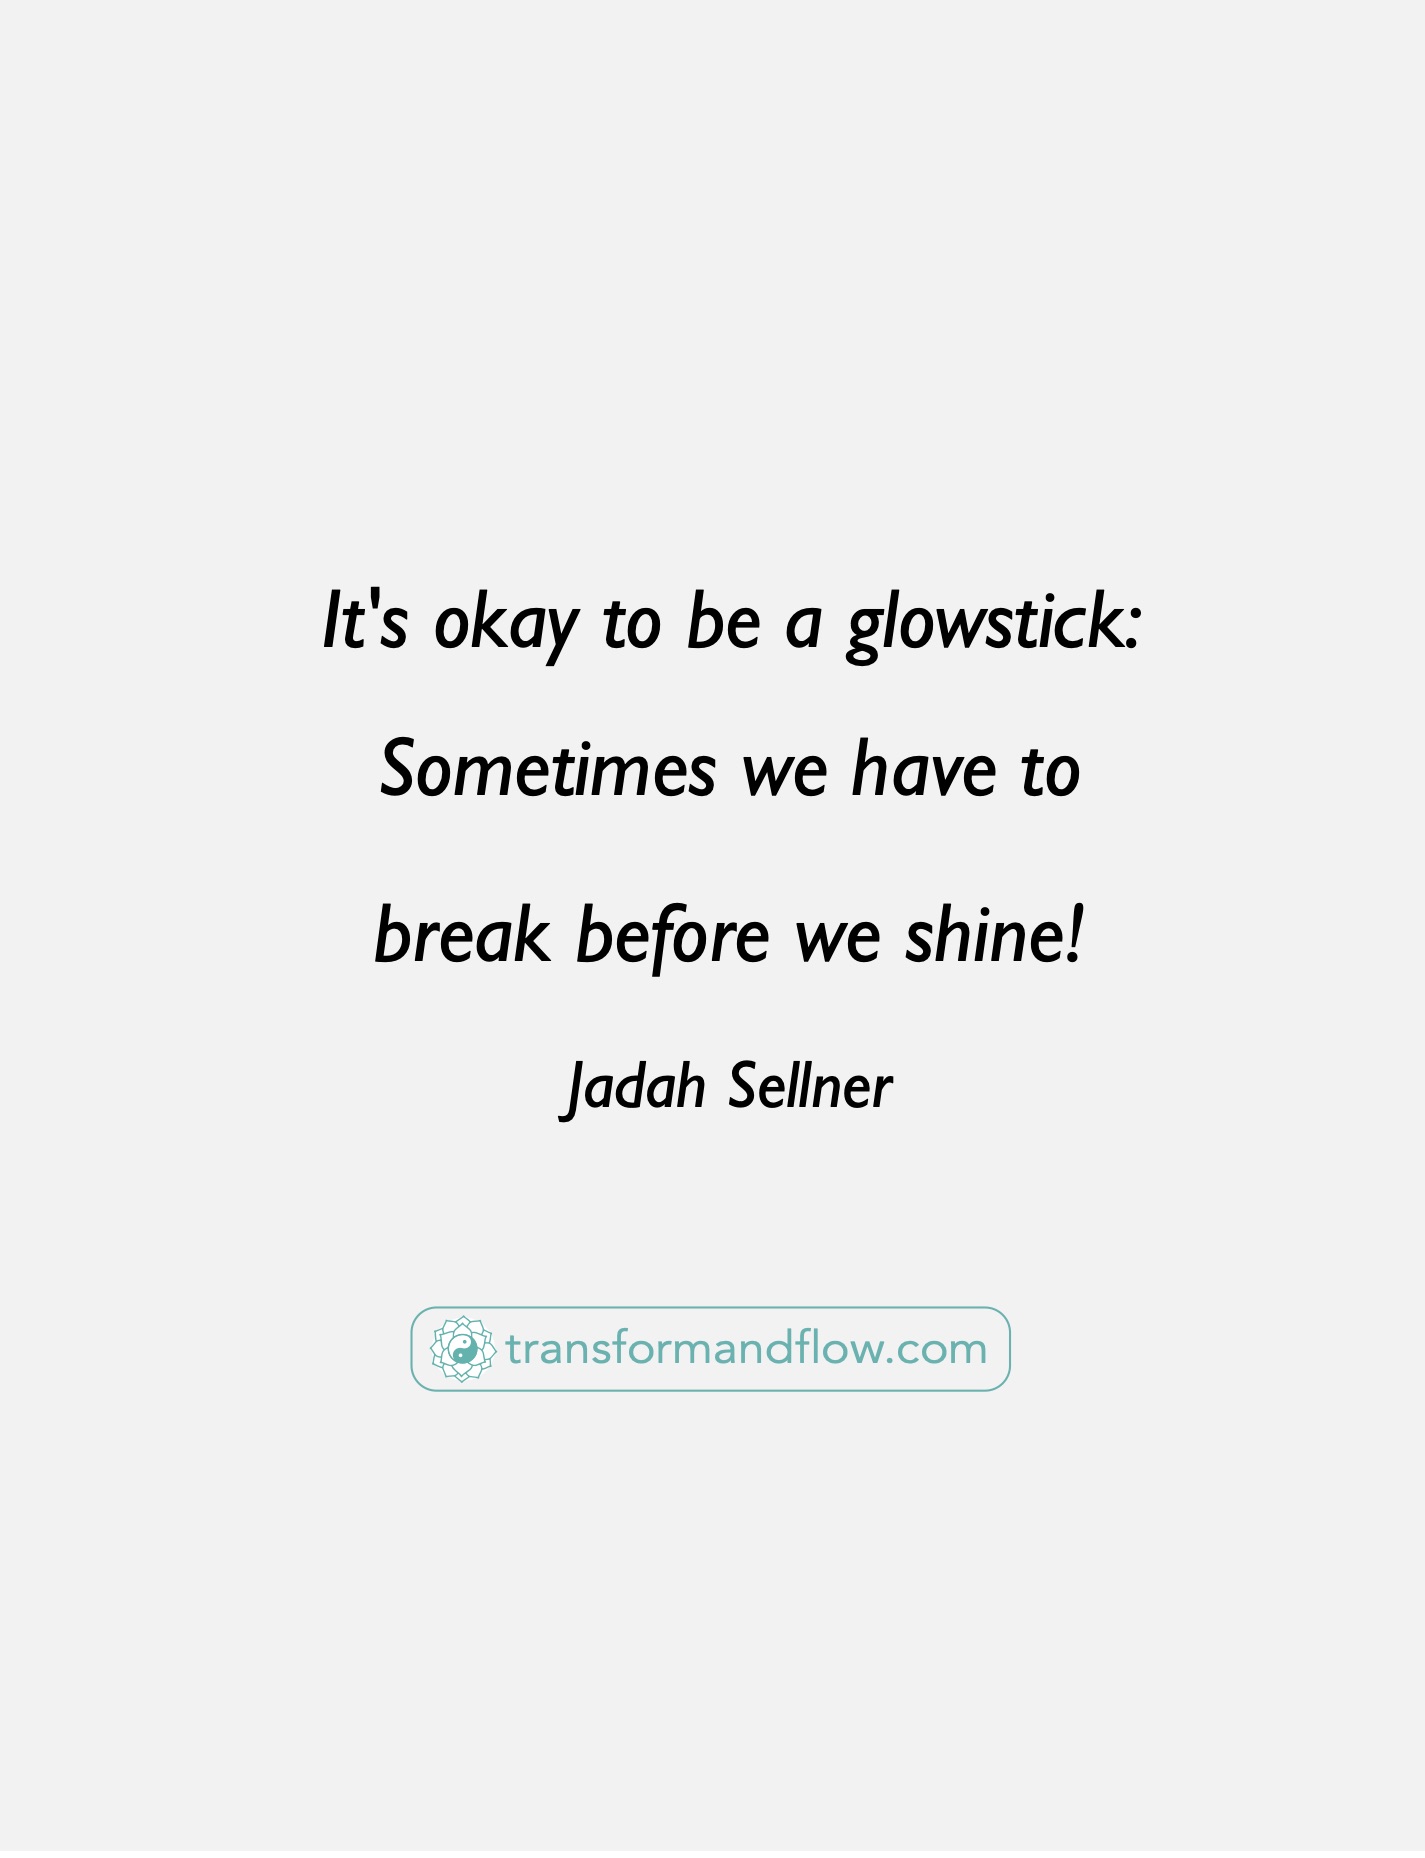 "It's okay to be a glowstick: Sometimes we have to break before we shine!" Jadah Sellner